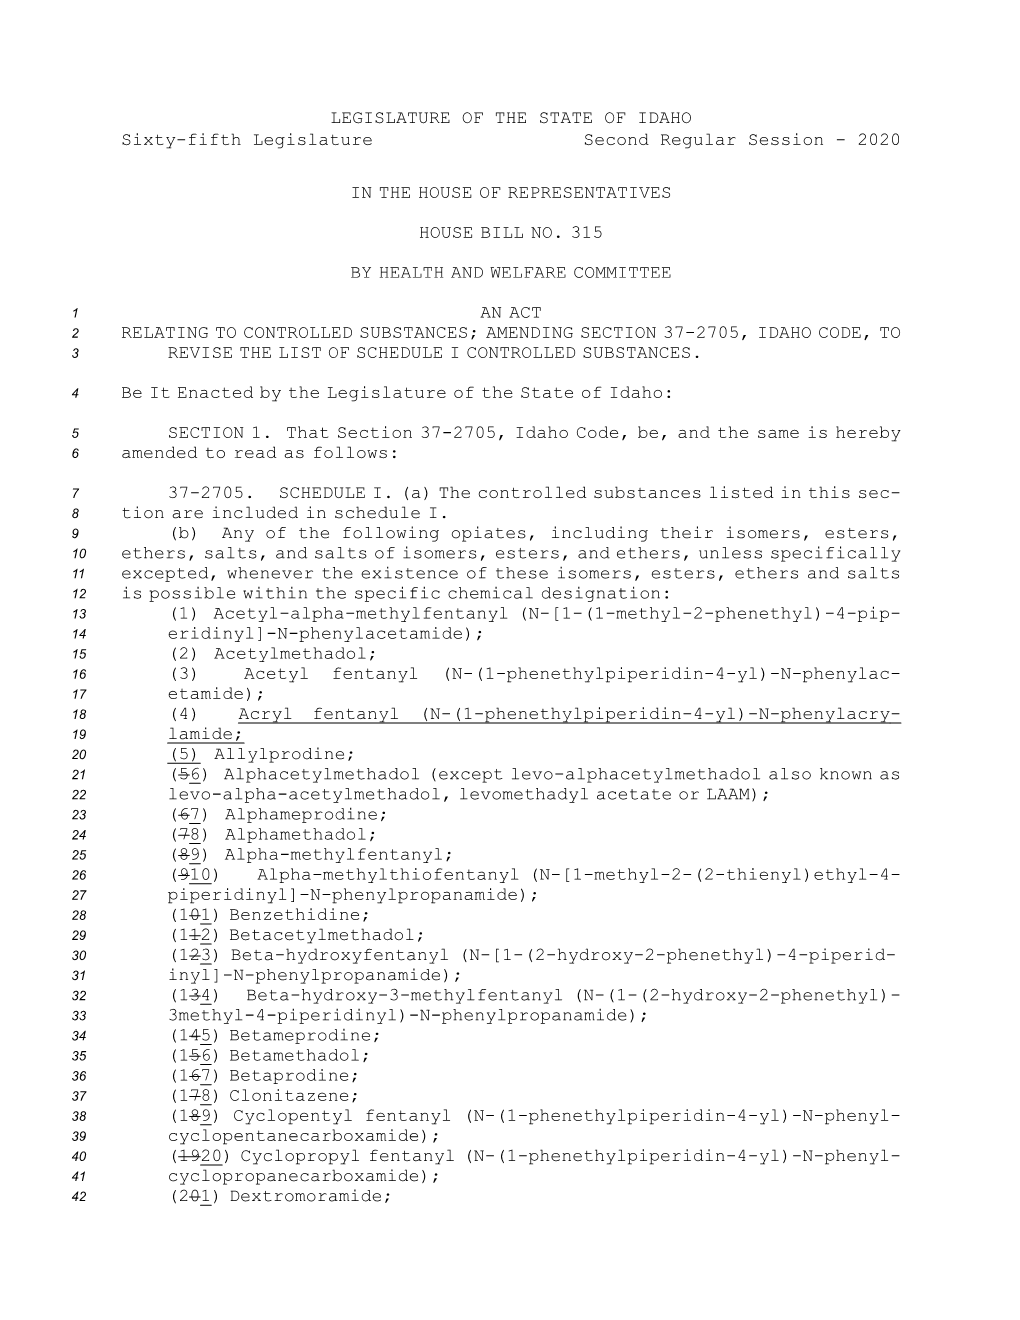 House Bill No.315 (2020)